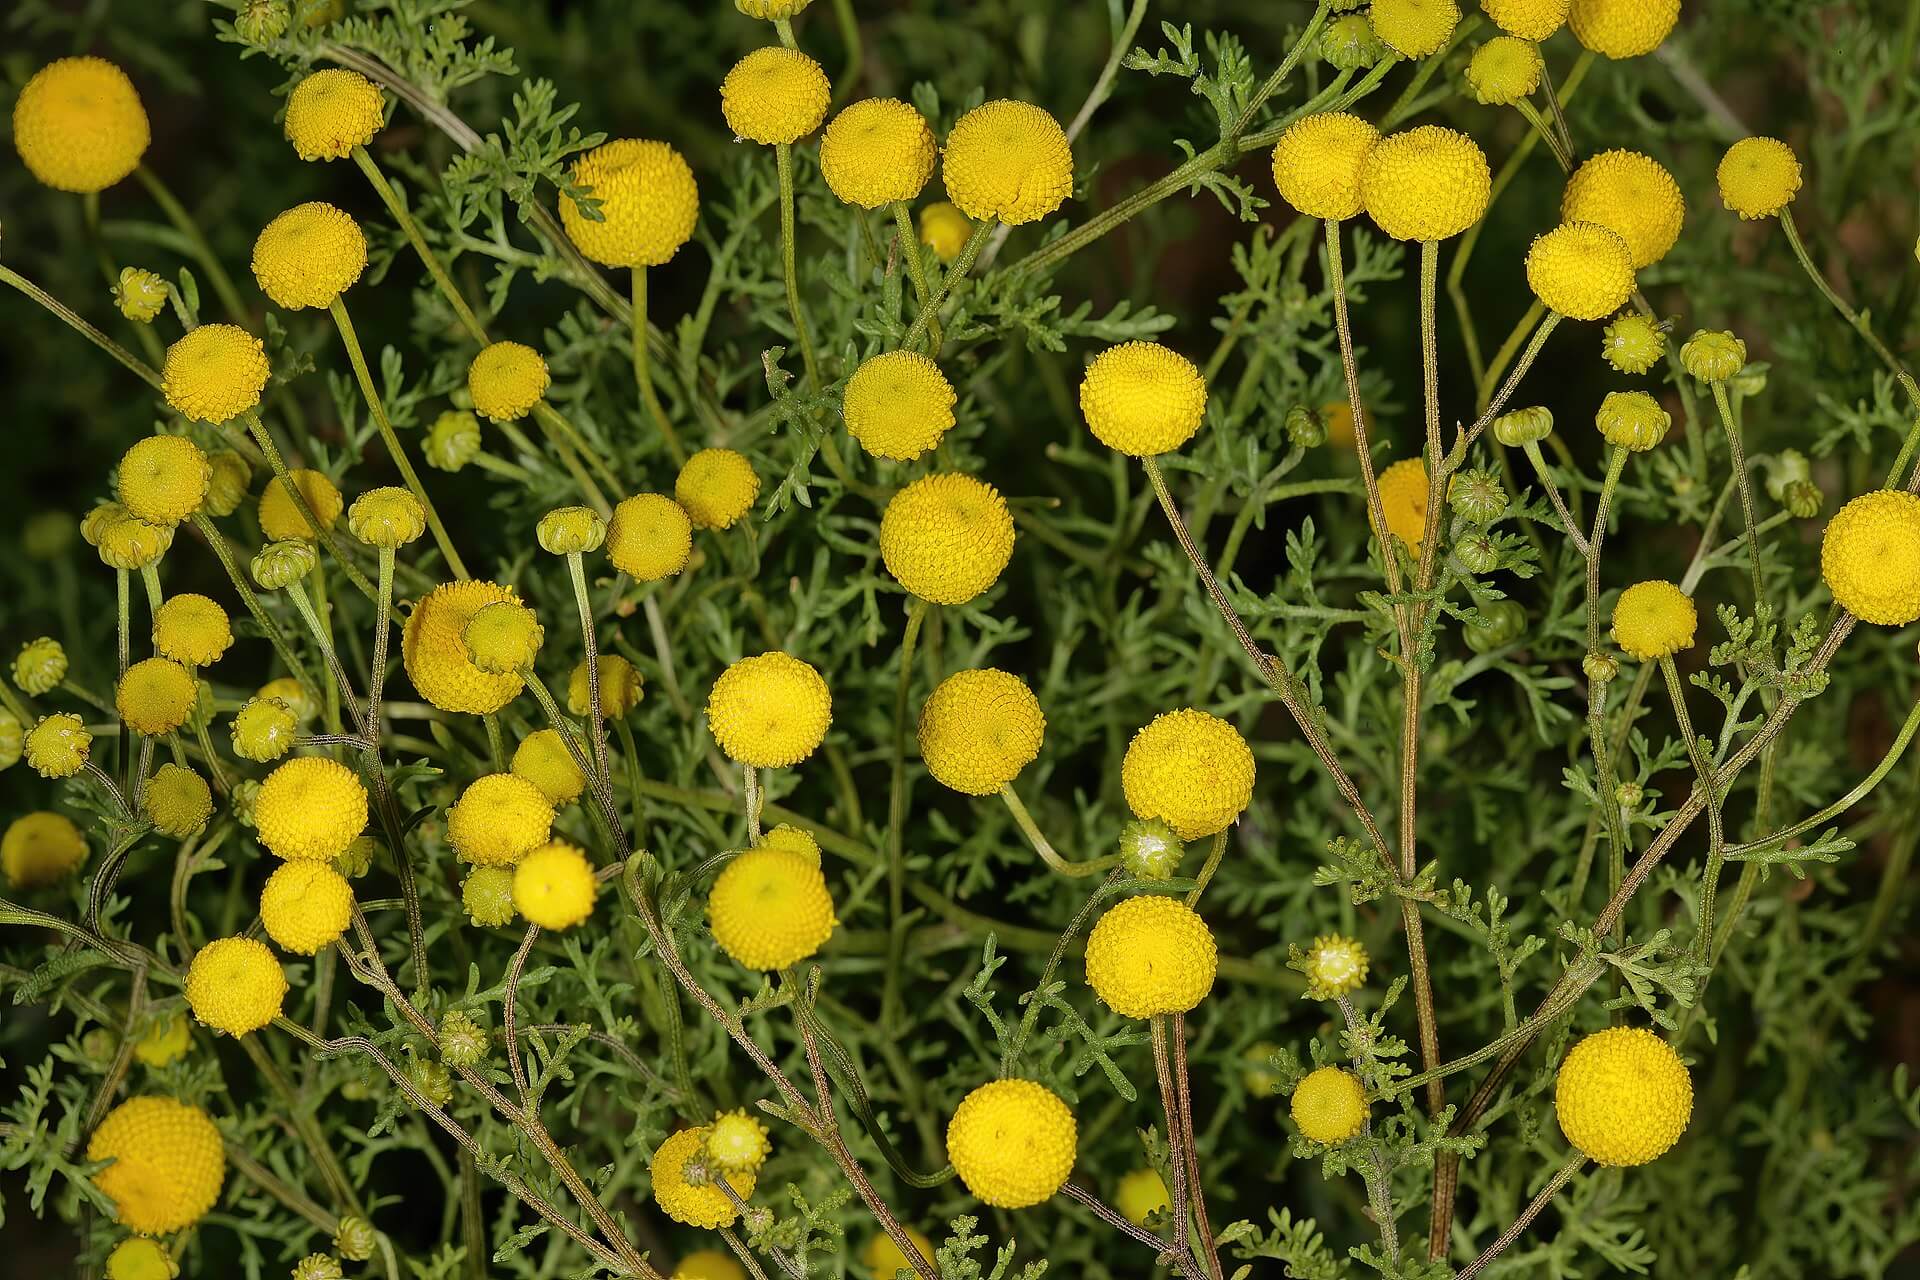 Stinknet - an invasive weed in Arizona.